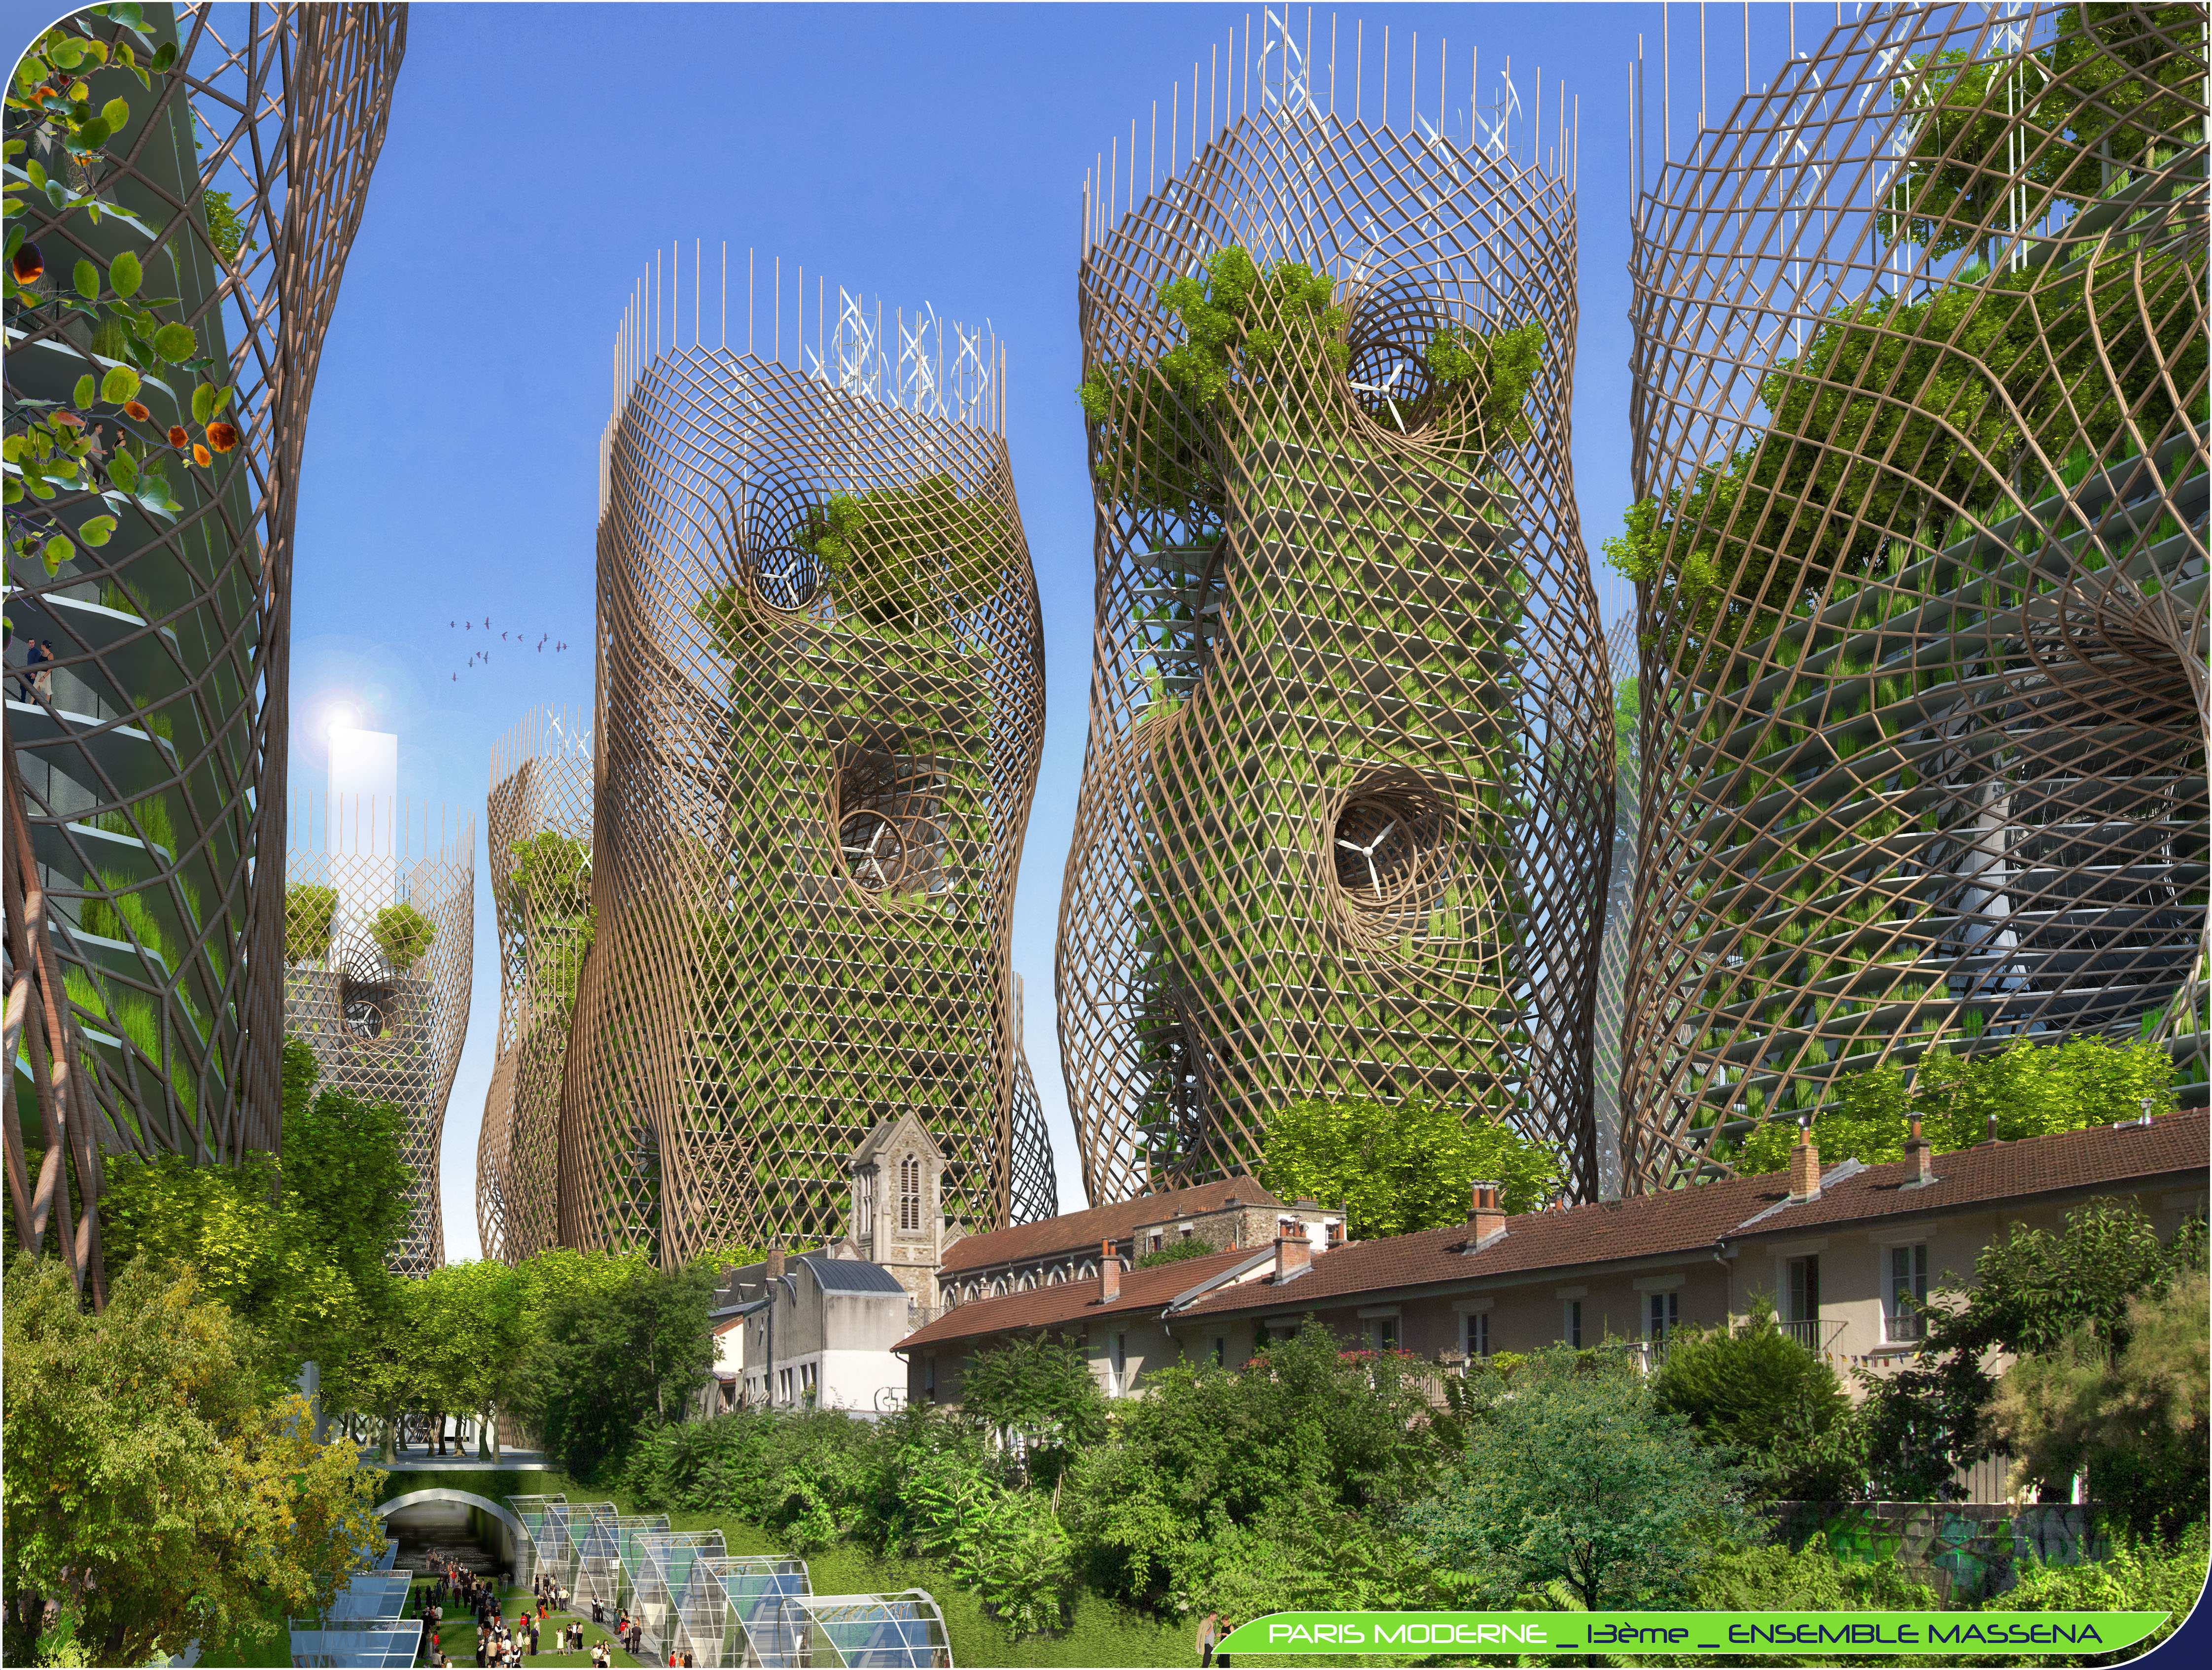 paris 2050 bamboo nest towers 2